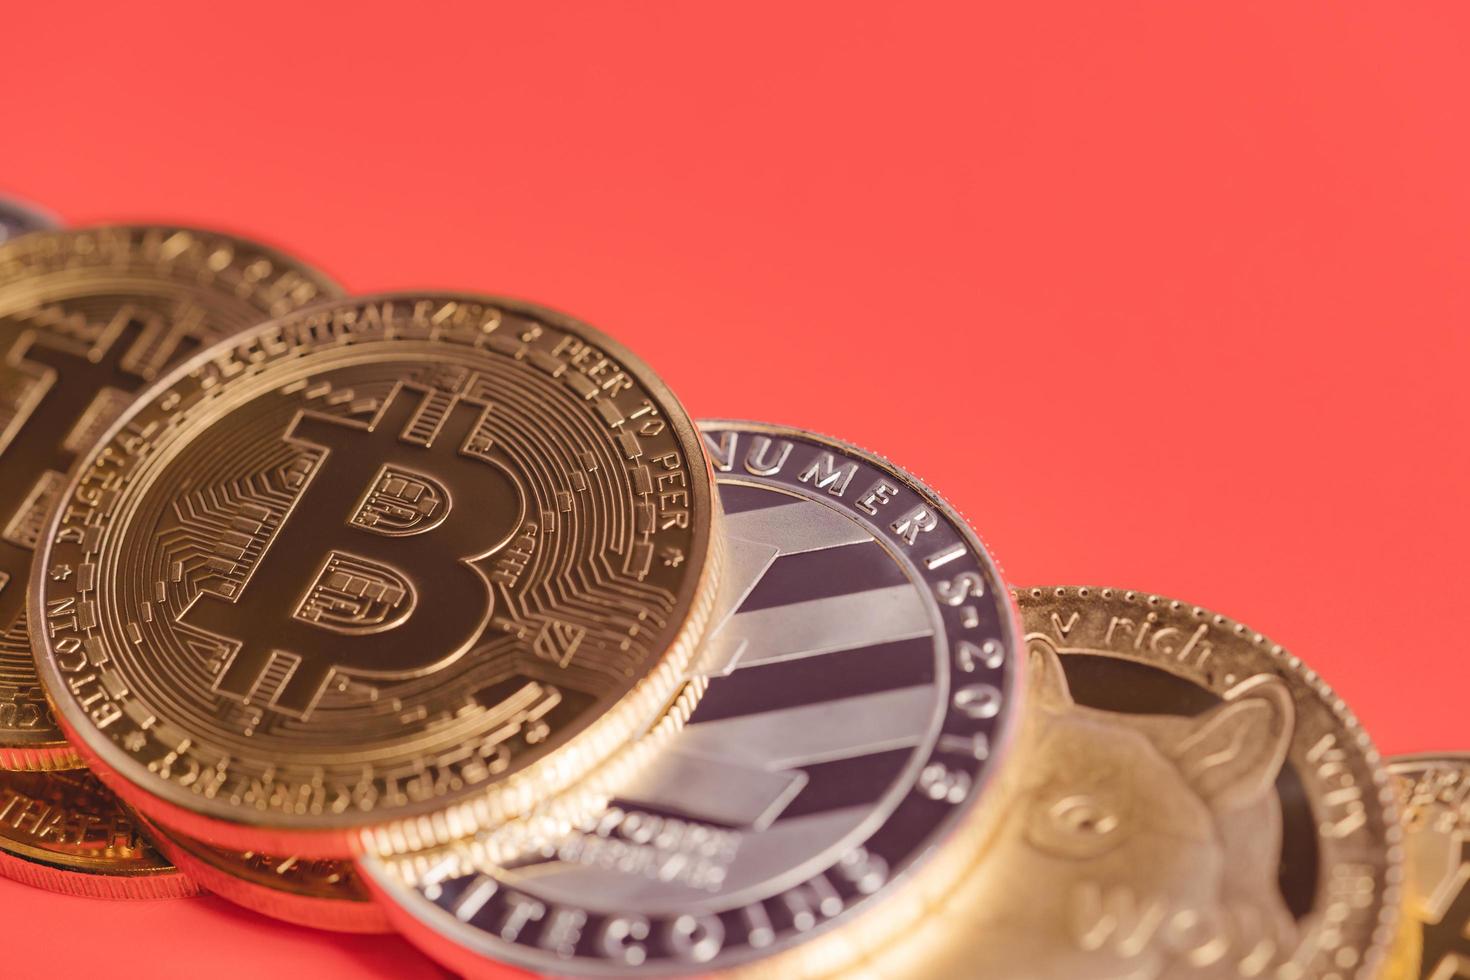 bitcoin btc en dogecoin doge groep opgenomen met cryptocurrency munt, ethereum eth, bitcoin cash bch, litecoin ltc symbool virtuele blockchain technologie toekomst is geld op rode achtergrond foto